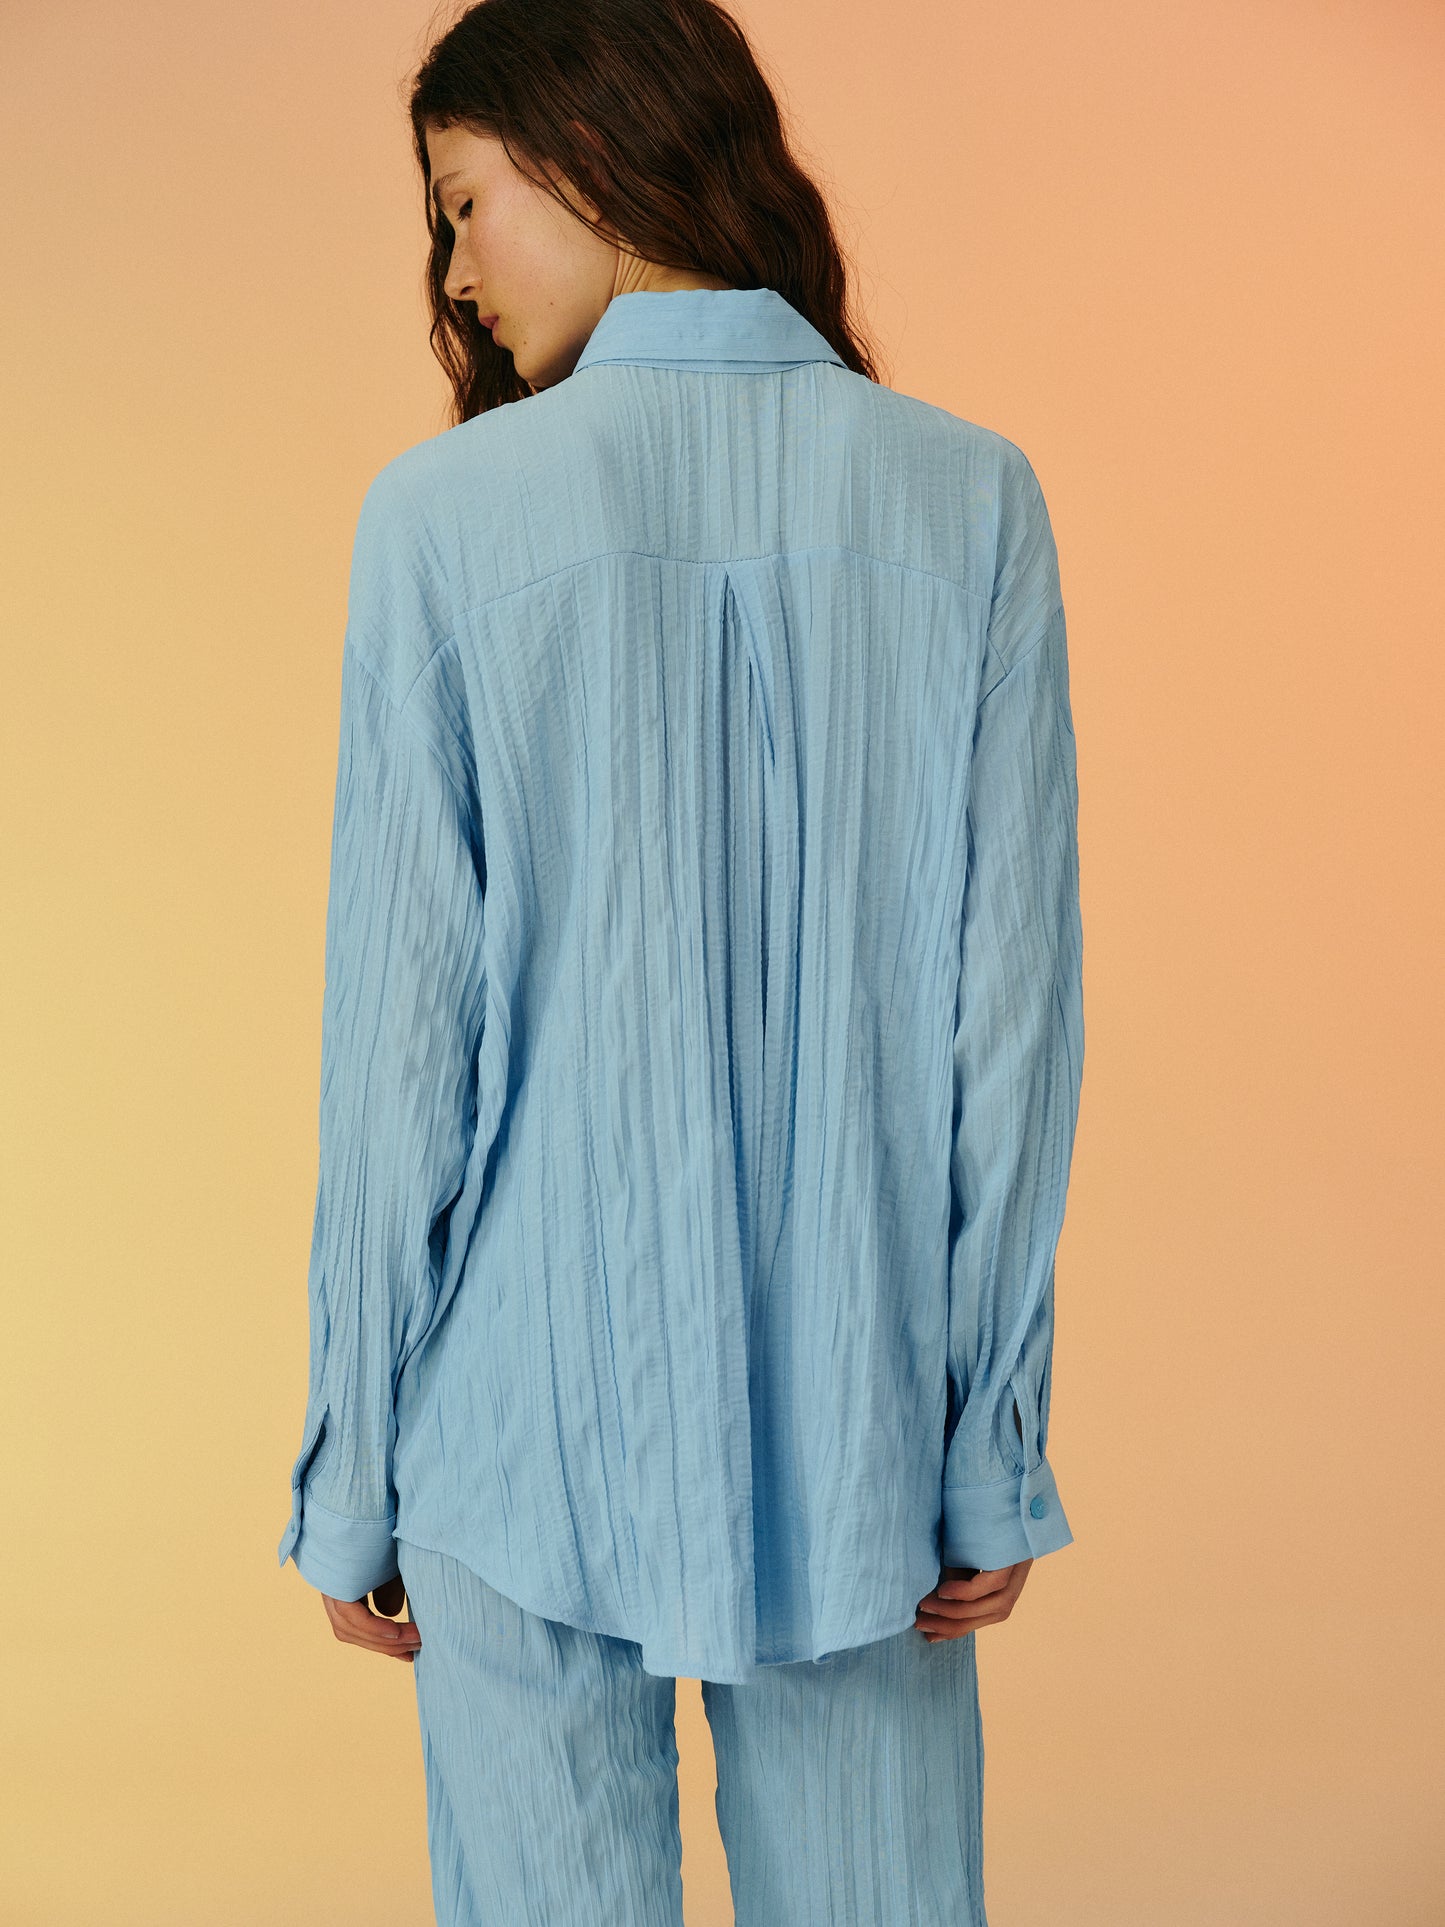 Crinkled Garment-Pleated Shirt, Sky Blue